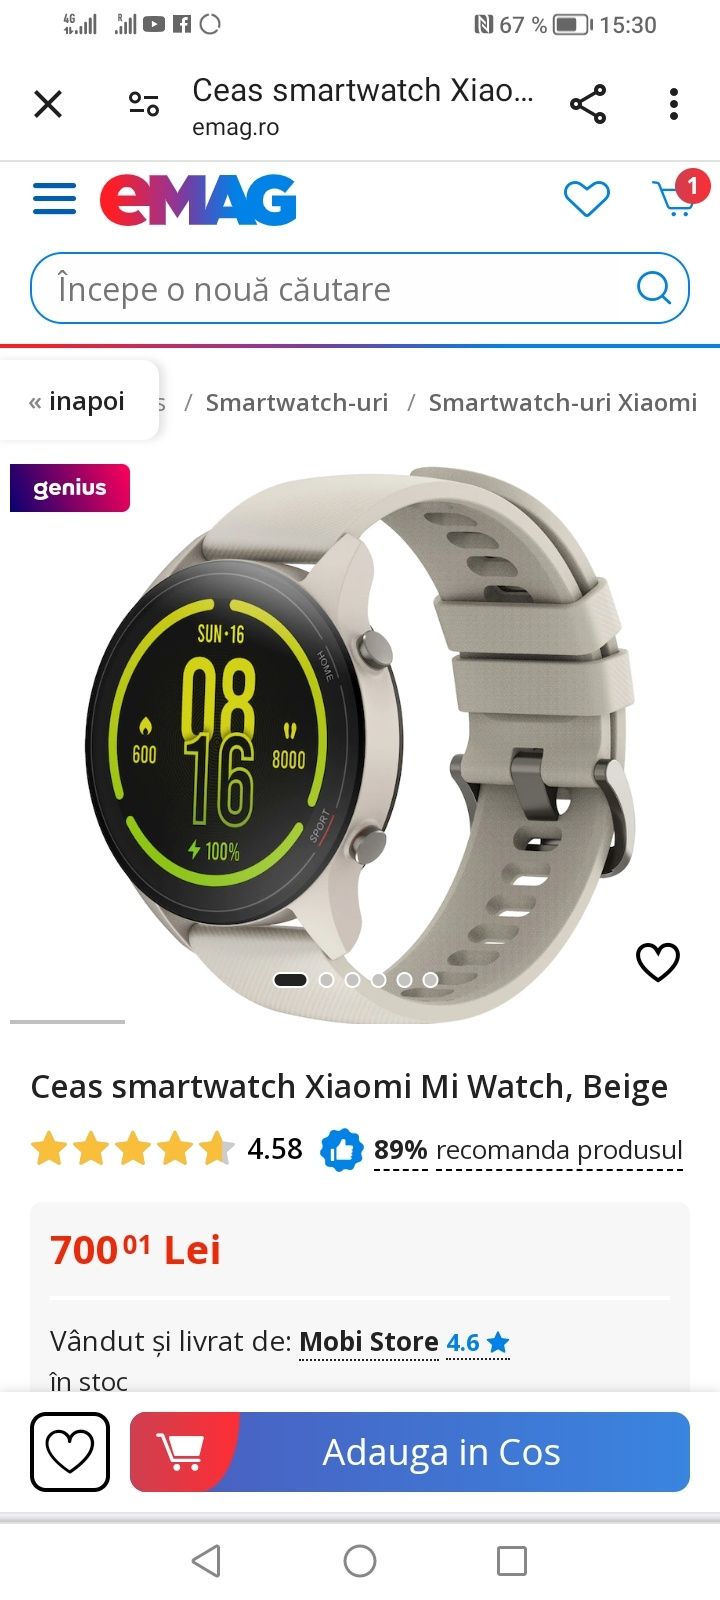 Ceas xiaomi smart watch